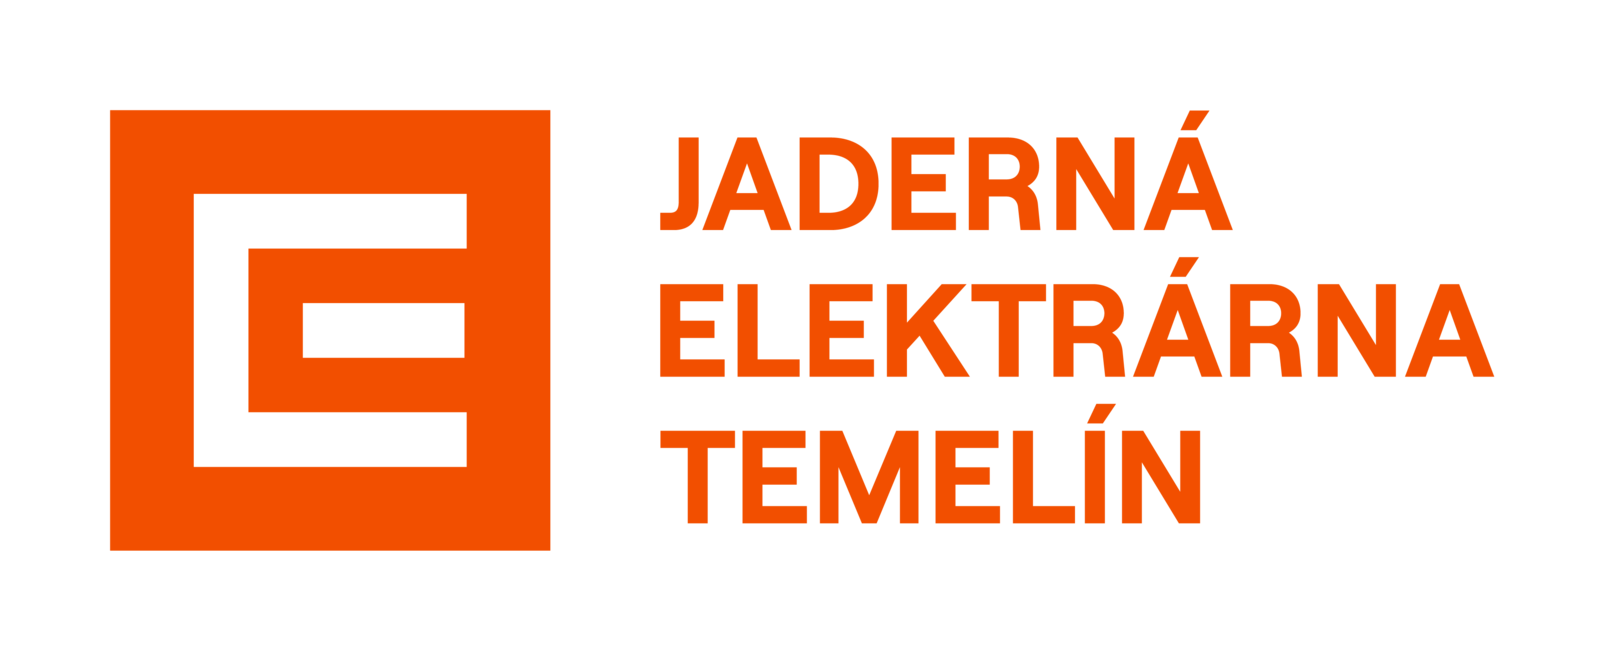 CEZ_Jaderna_elektrarna_Temelin_logo_Barva_pozitiv_RGB.png